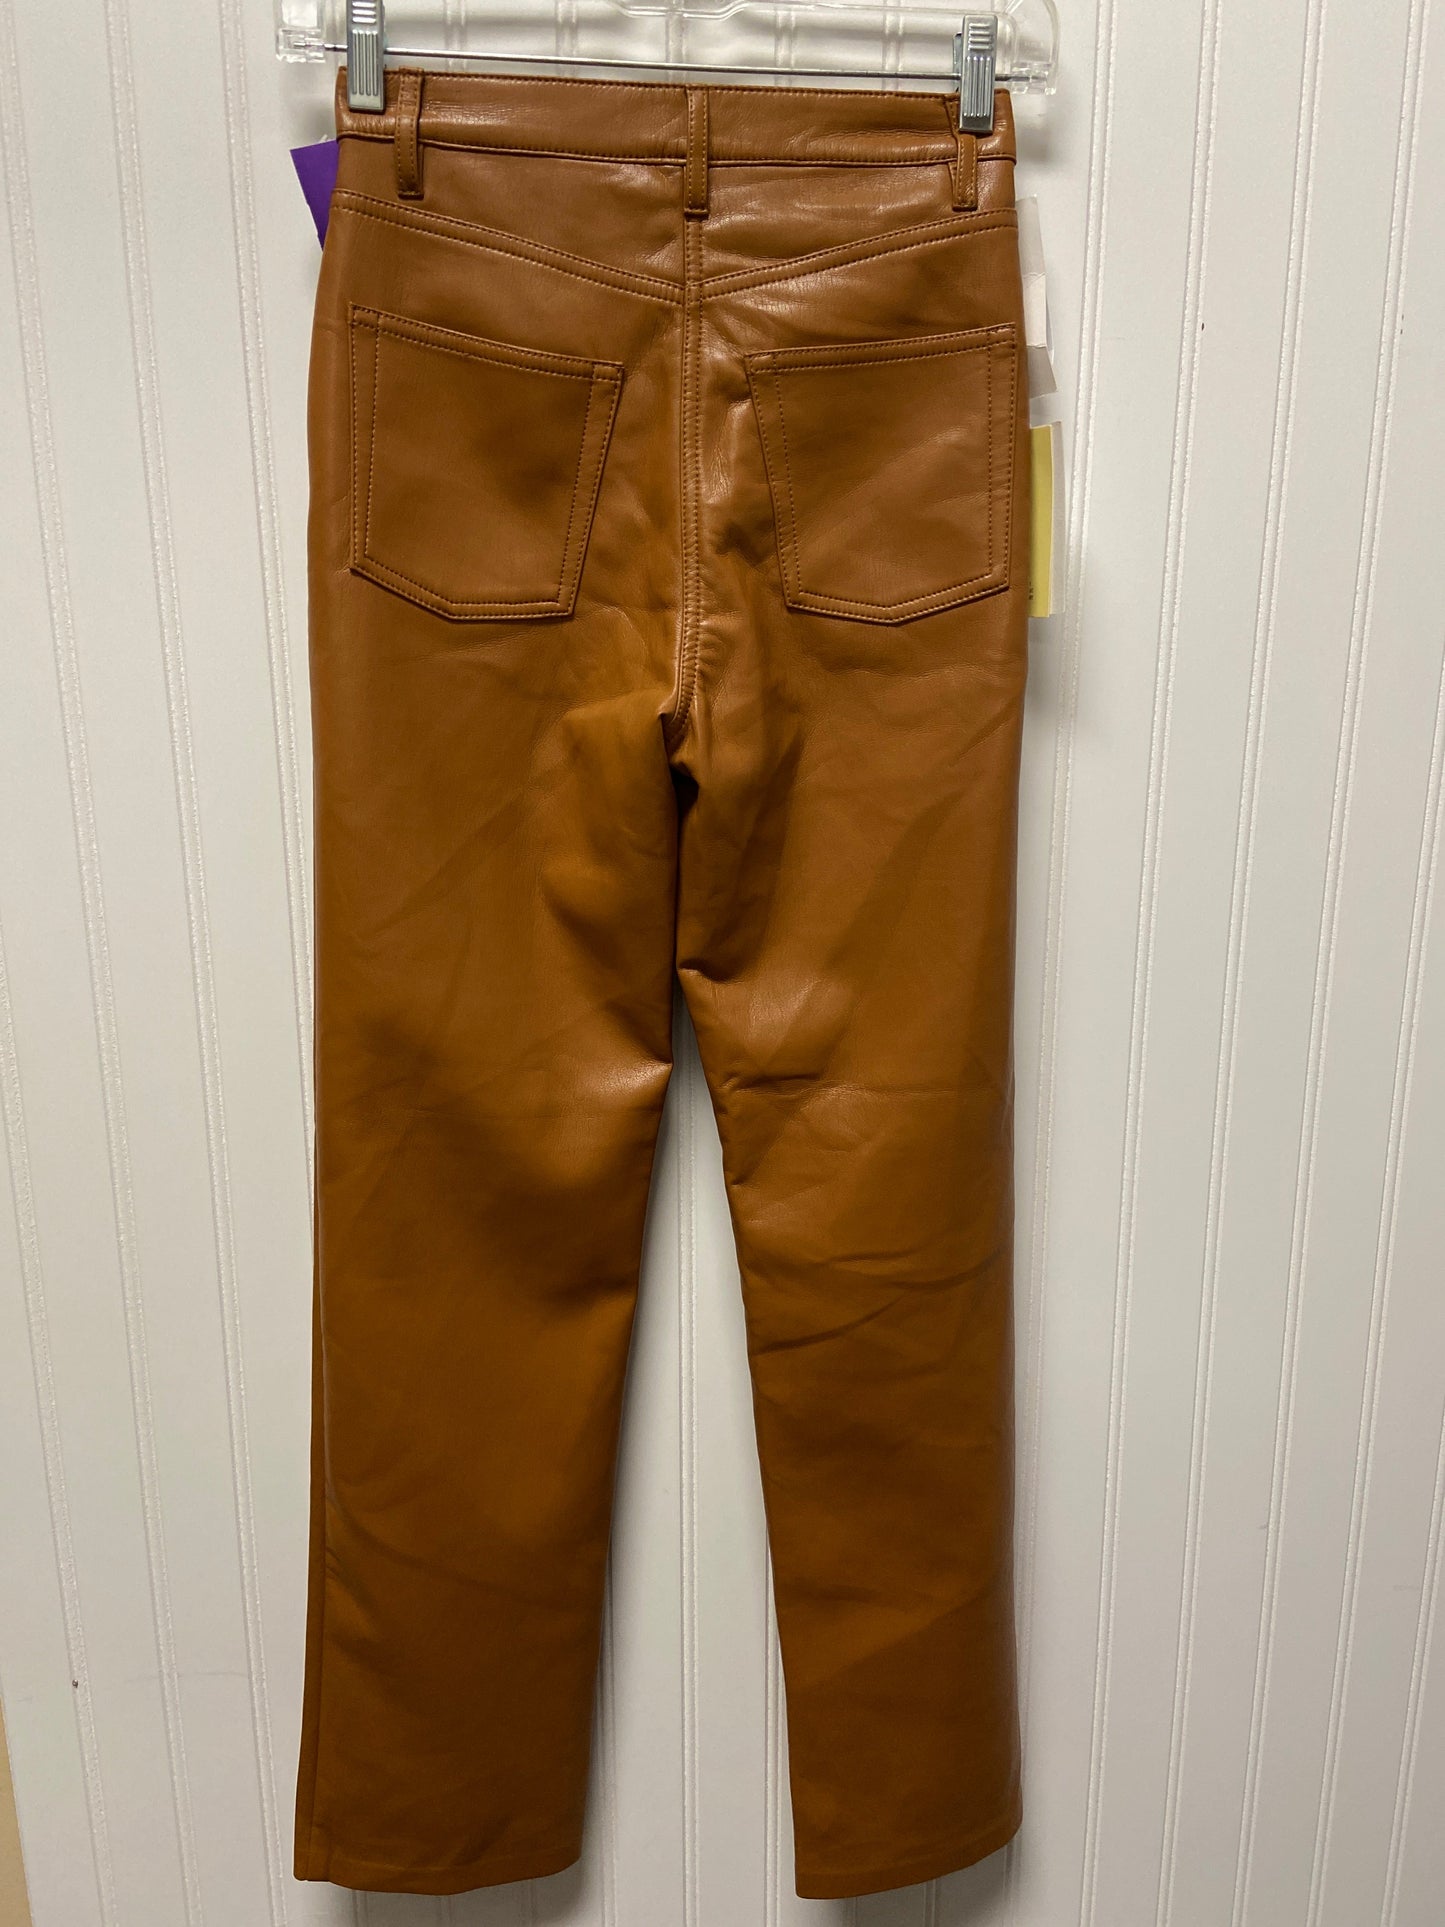 Tan Pants Designer Wilfred, Size 00